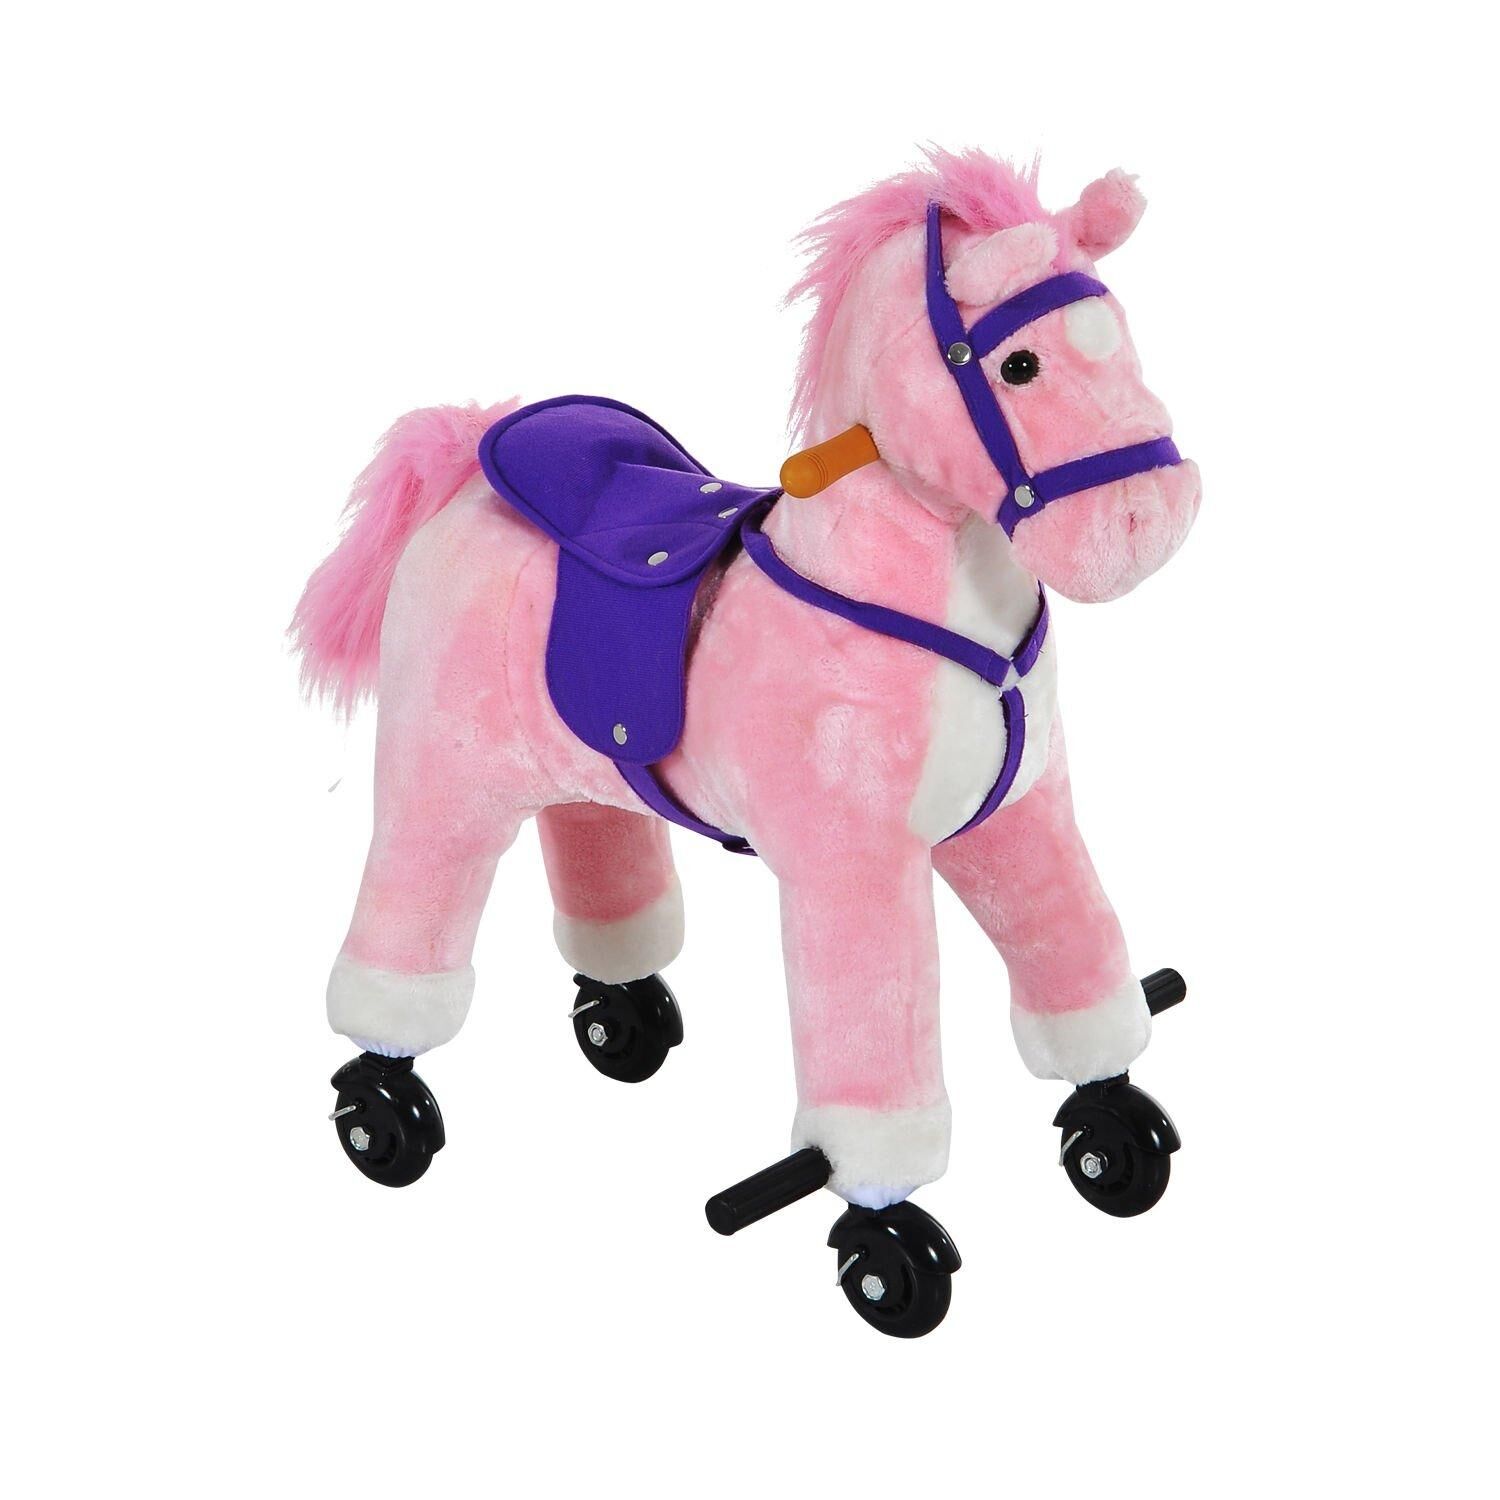 HOMCOM Rocking Horse Little Baby Plush Toy Wooden Style Ride on Rocker Sound Kids Gift